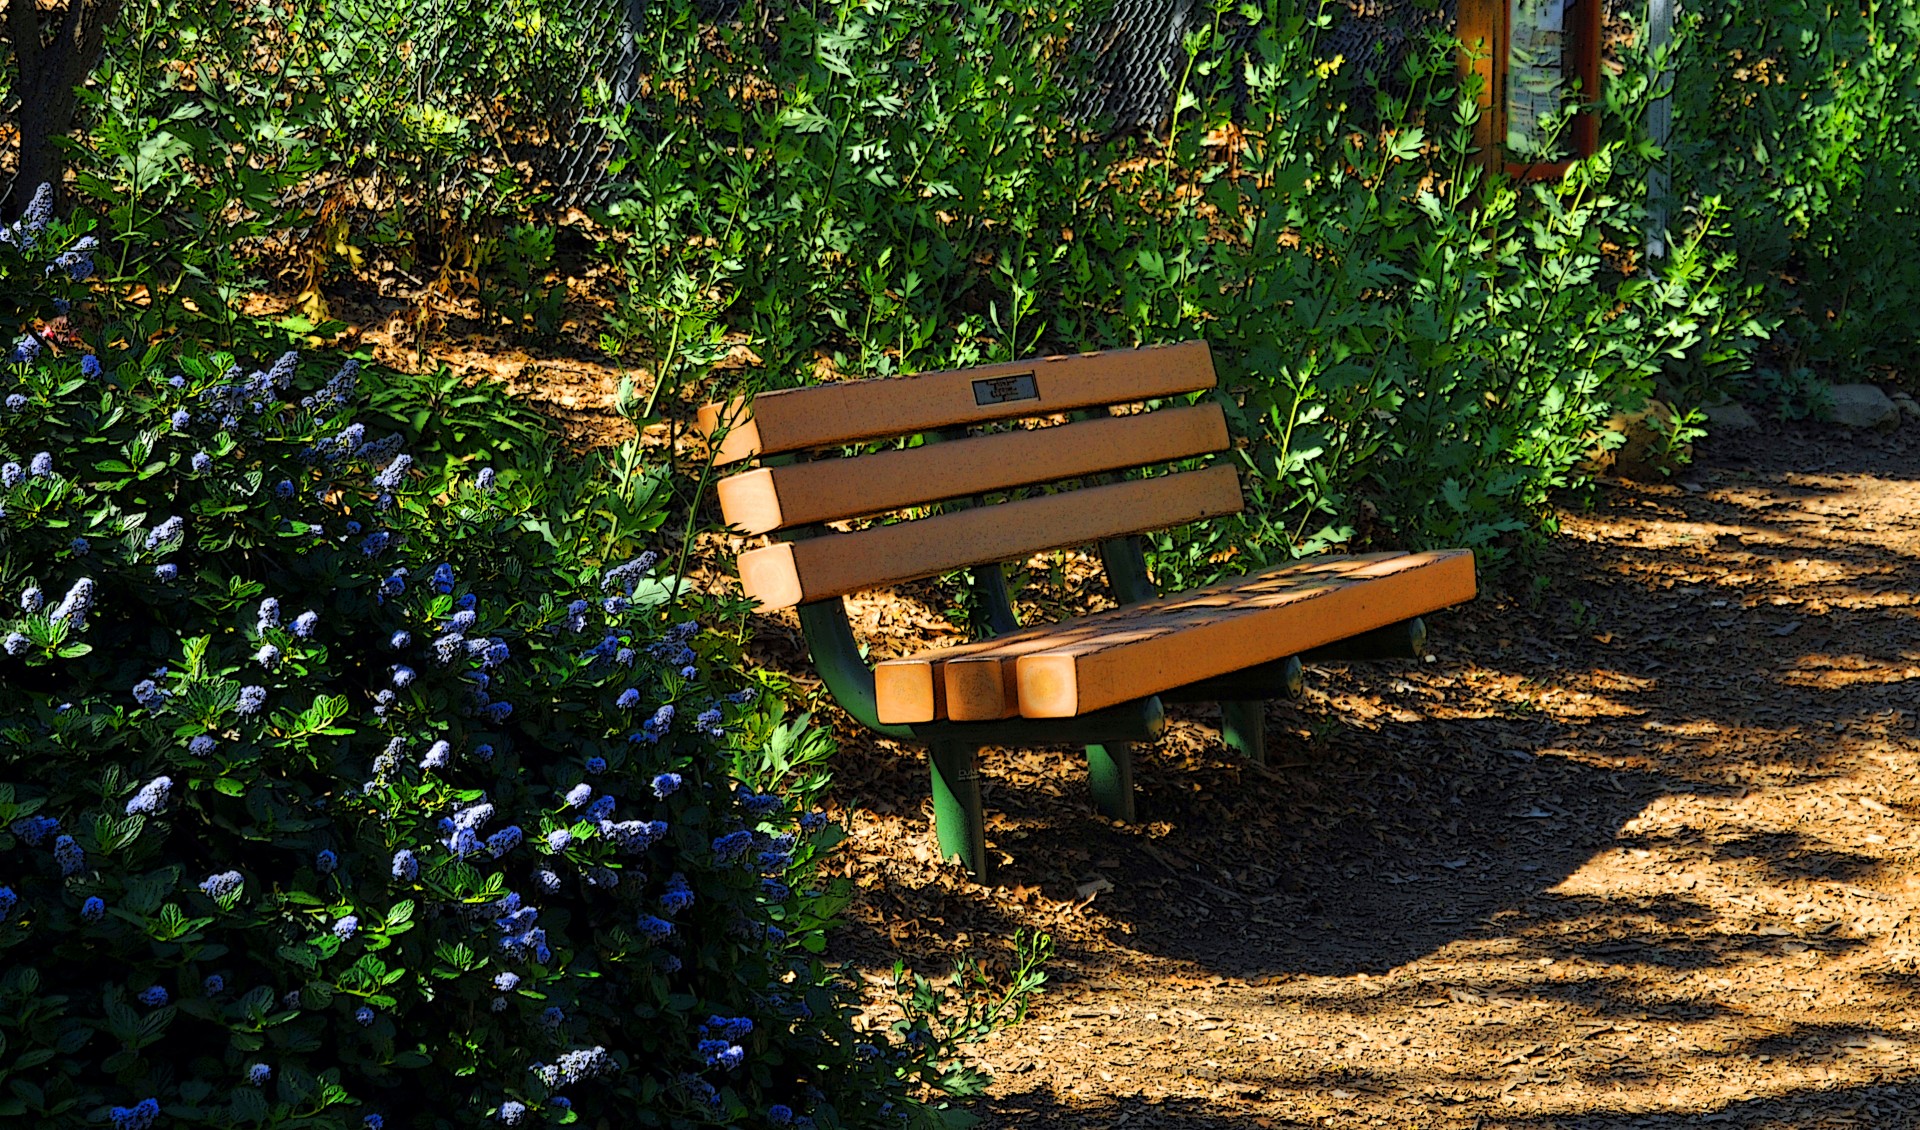 Bench Seat Botanical Gardens Thousand Oaks California Free Image